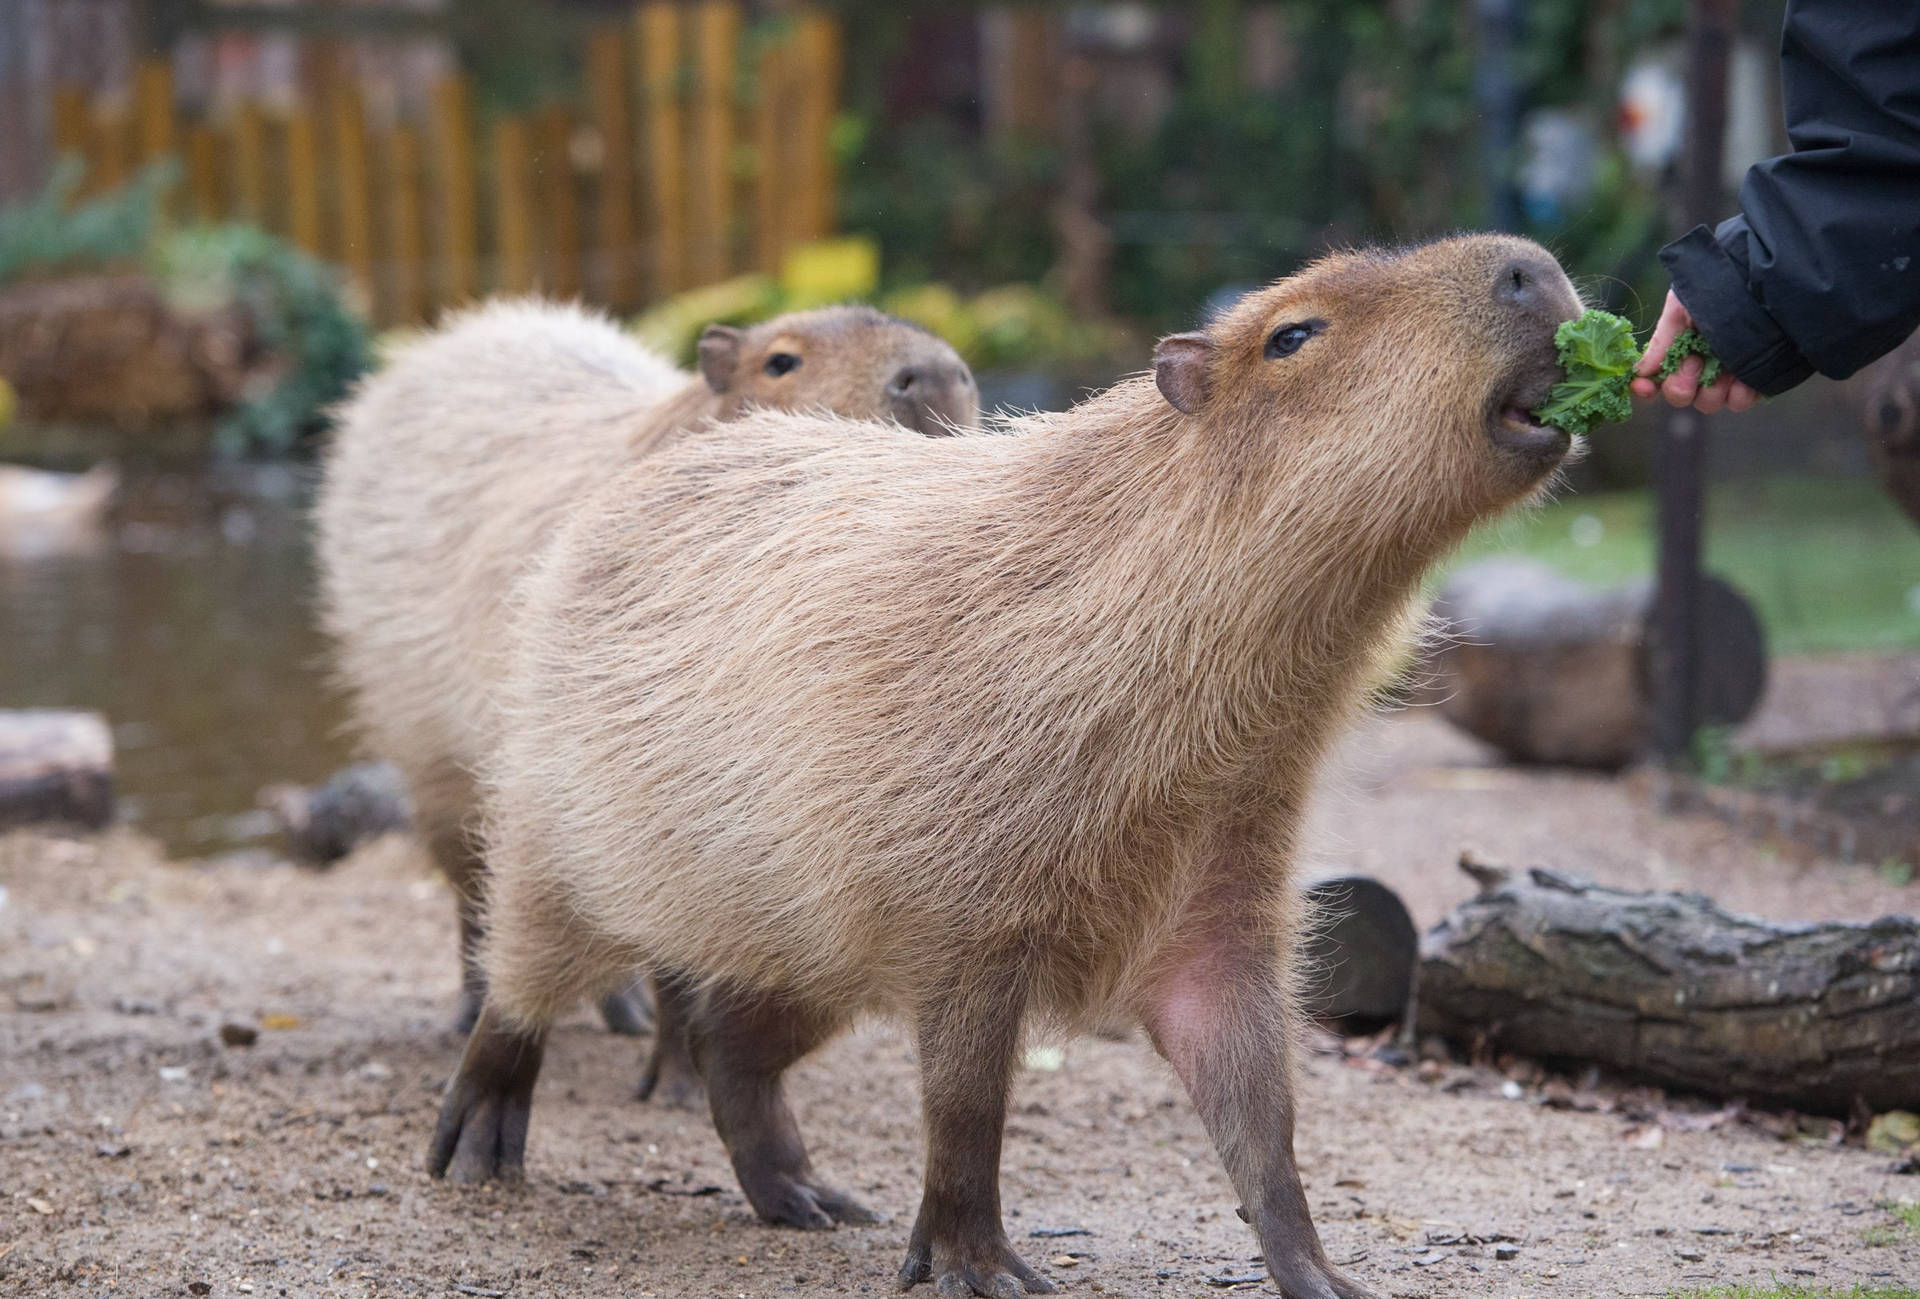 Capybara Biting On Lettuce